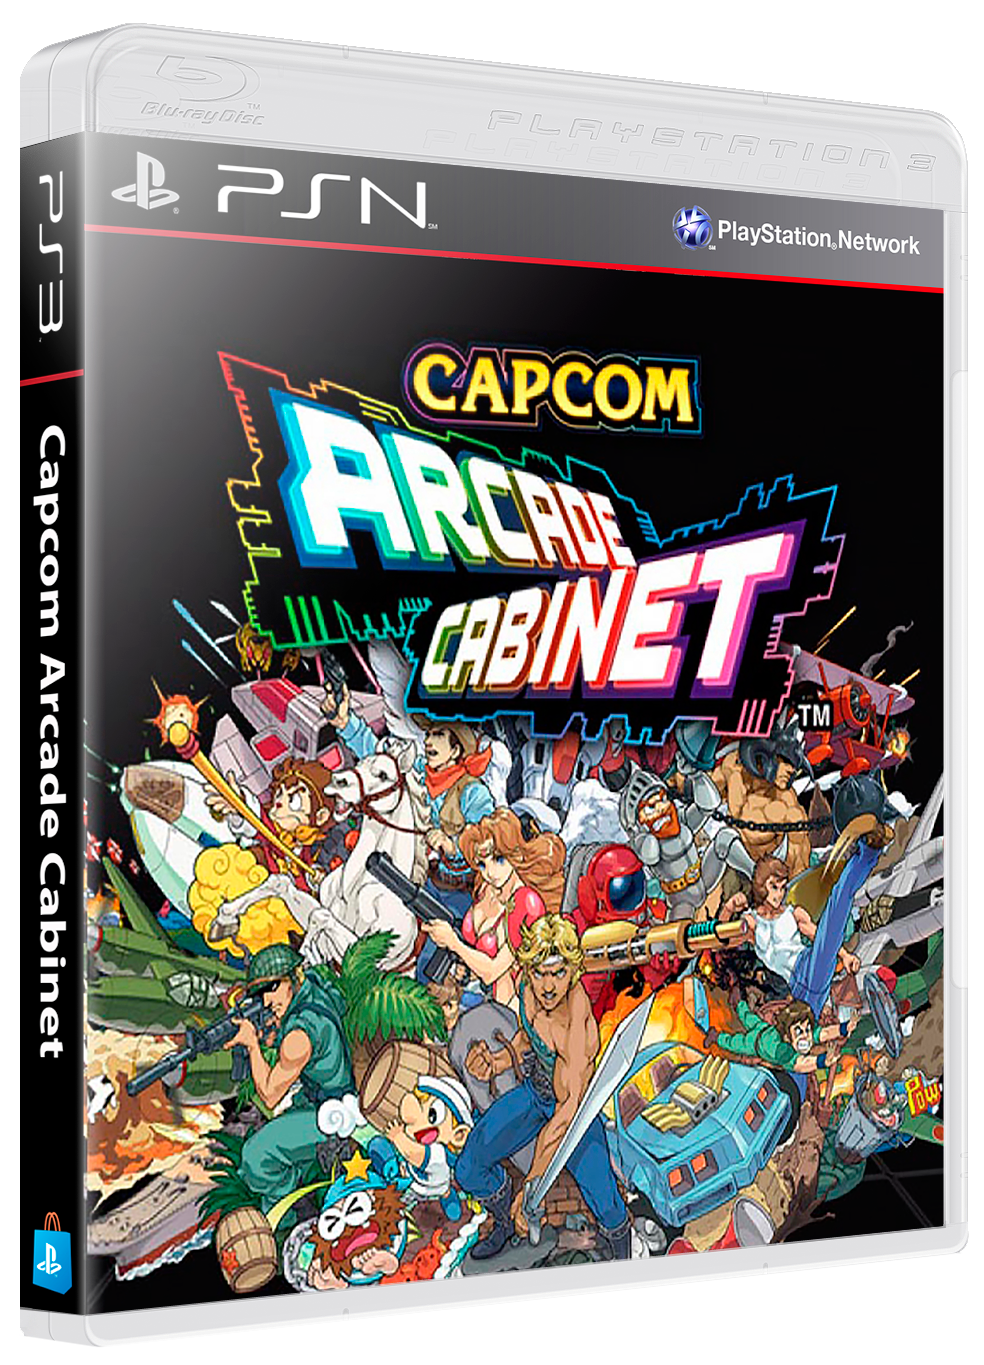 Capcom Arcade Cabinet Details - LaunchBox Database